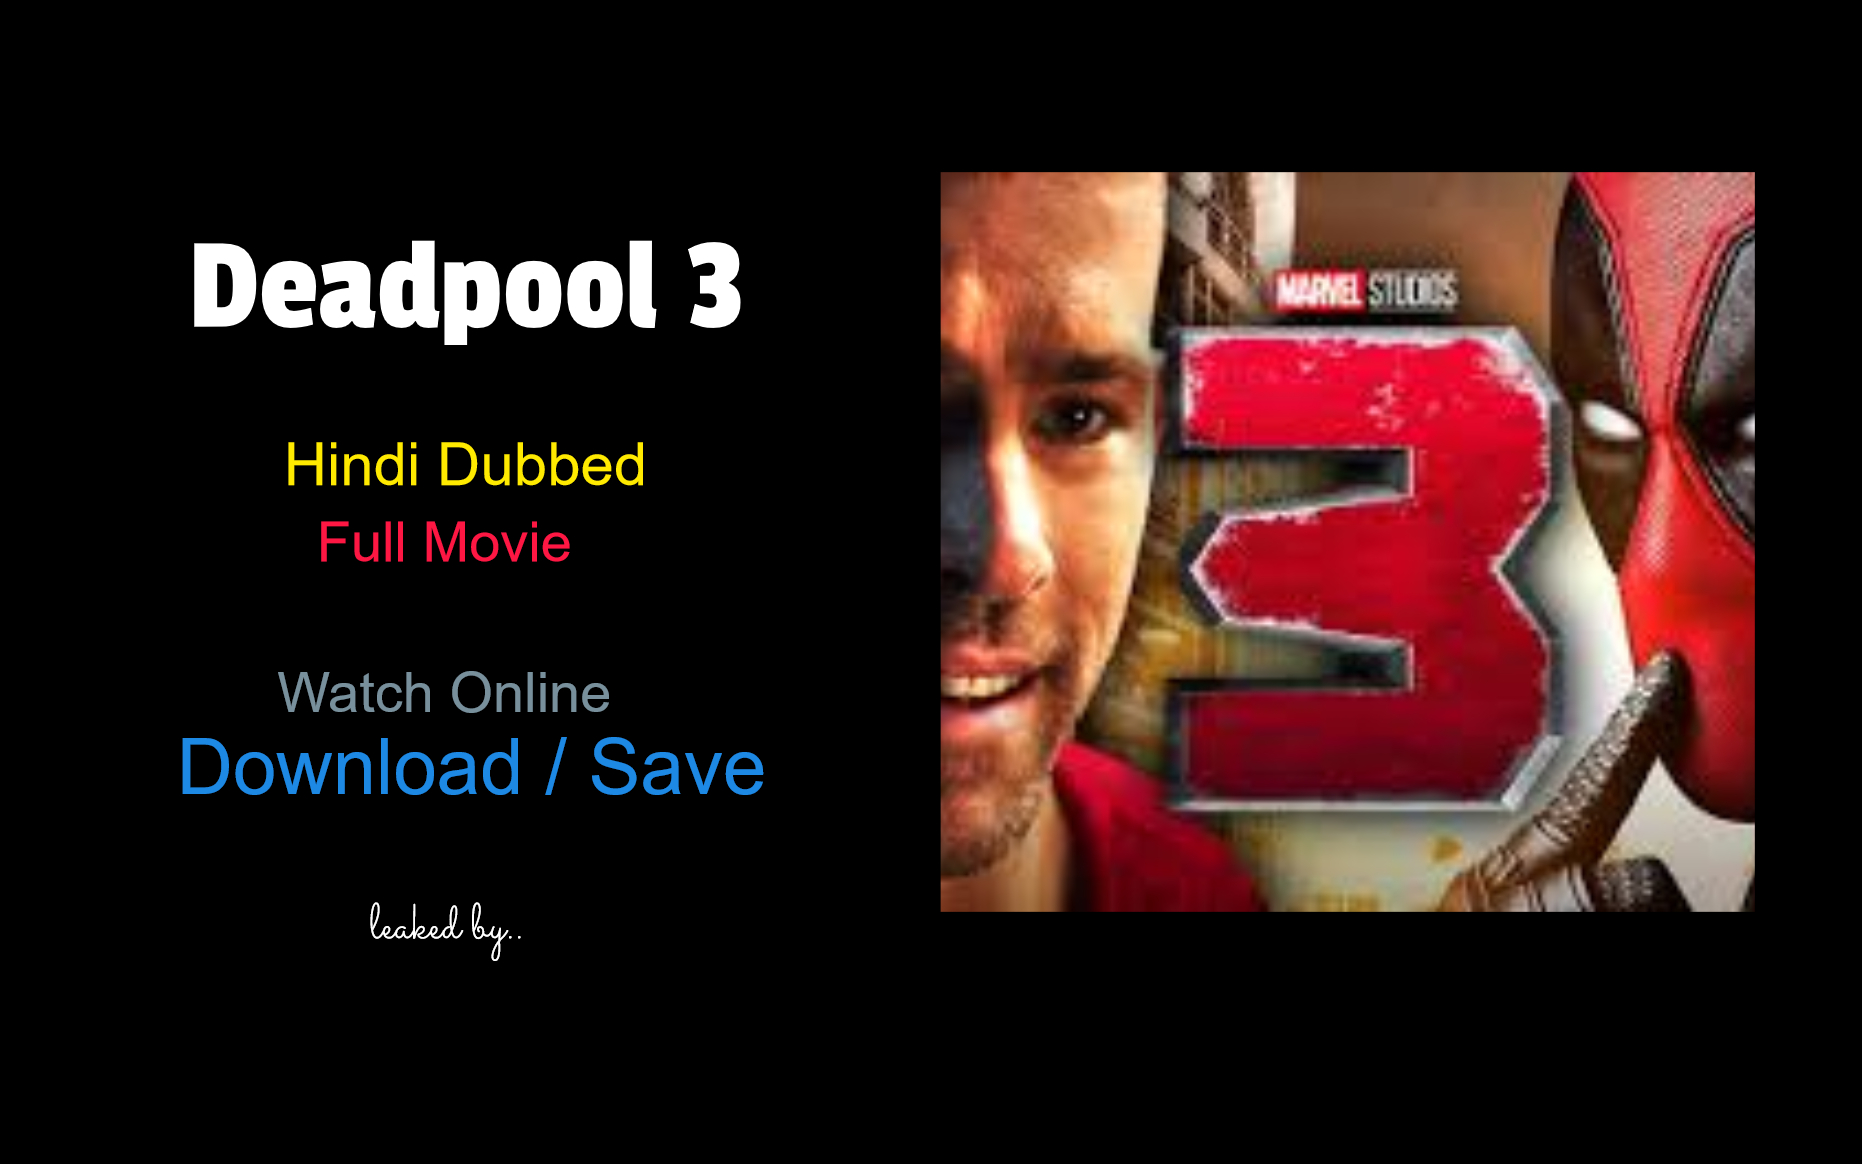 Deadpool 3 (2021) full movie watch online download in bluray 480p, 720p, 1080p hdrip